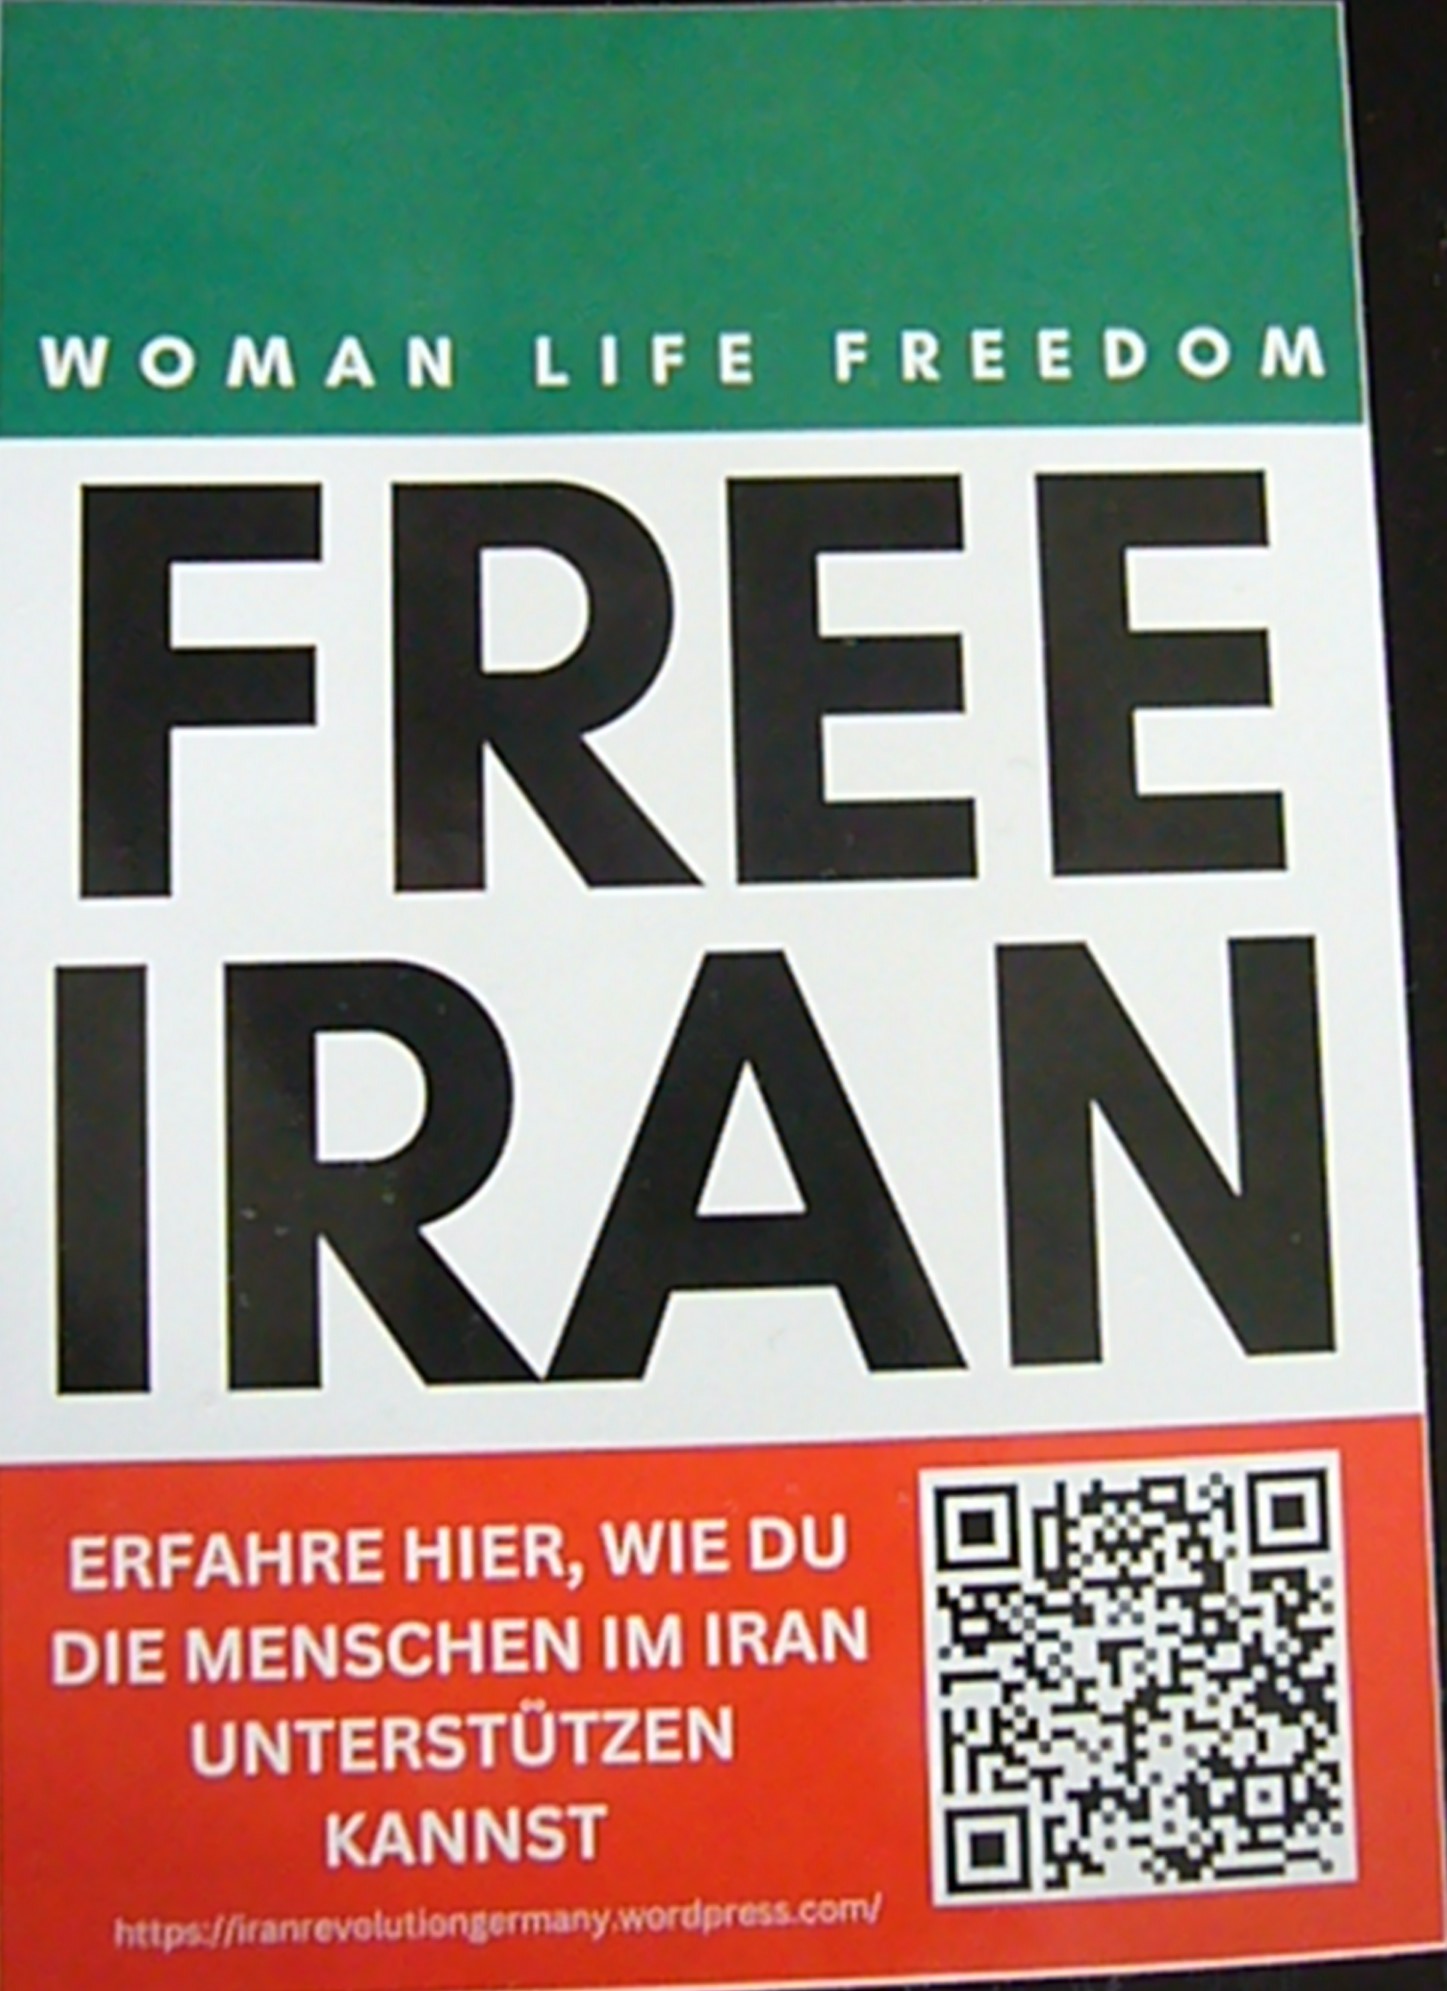 Aufkleber "Fee Iran"